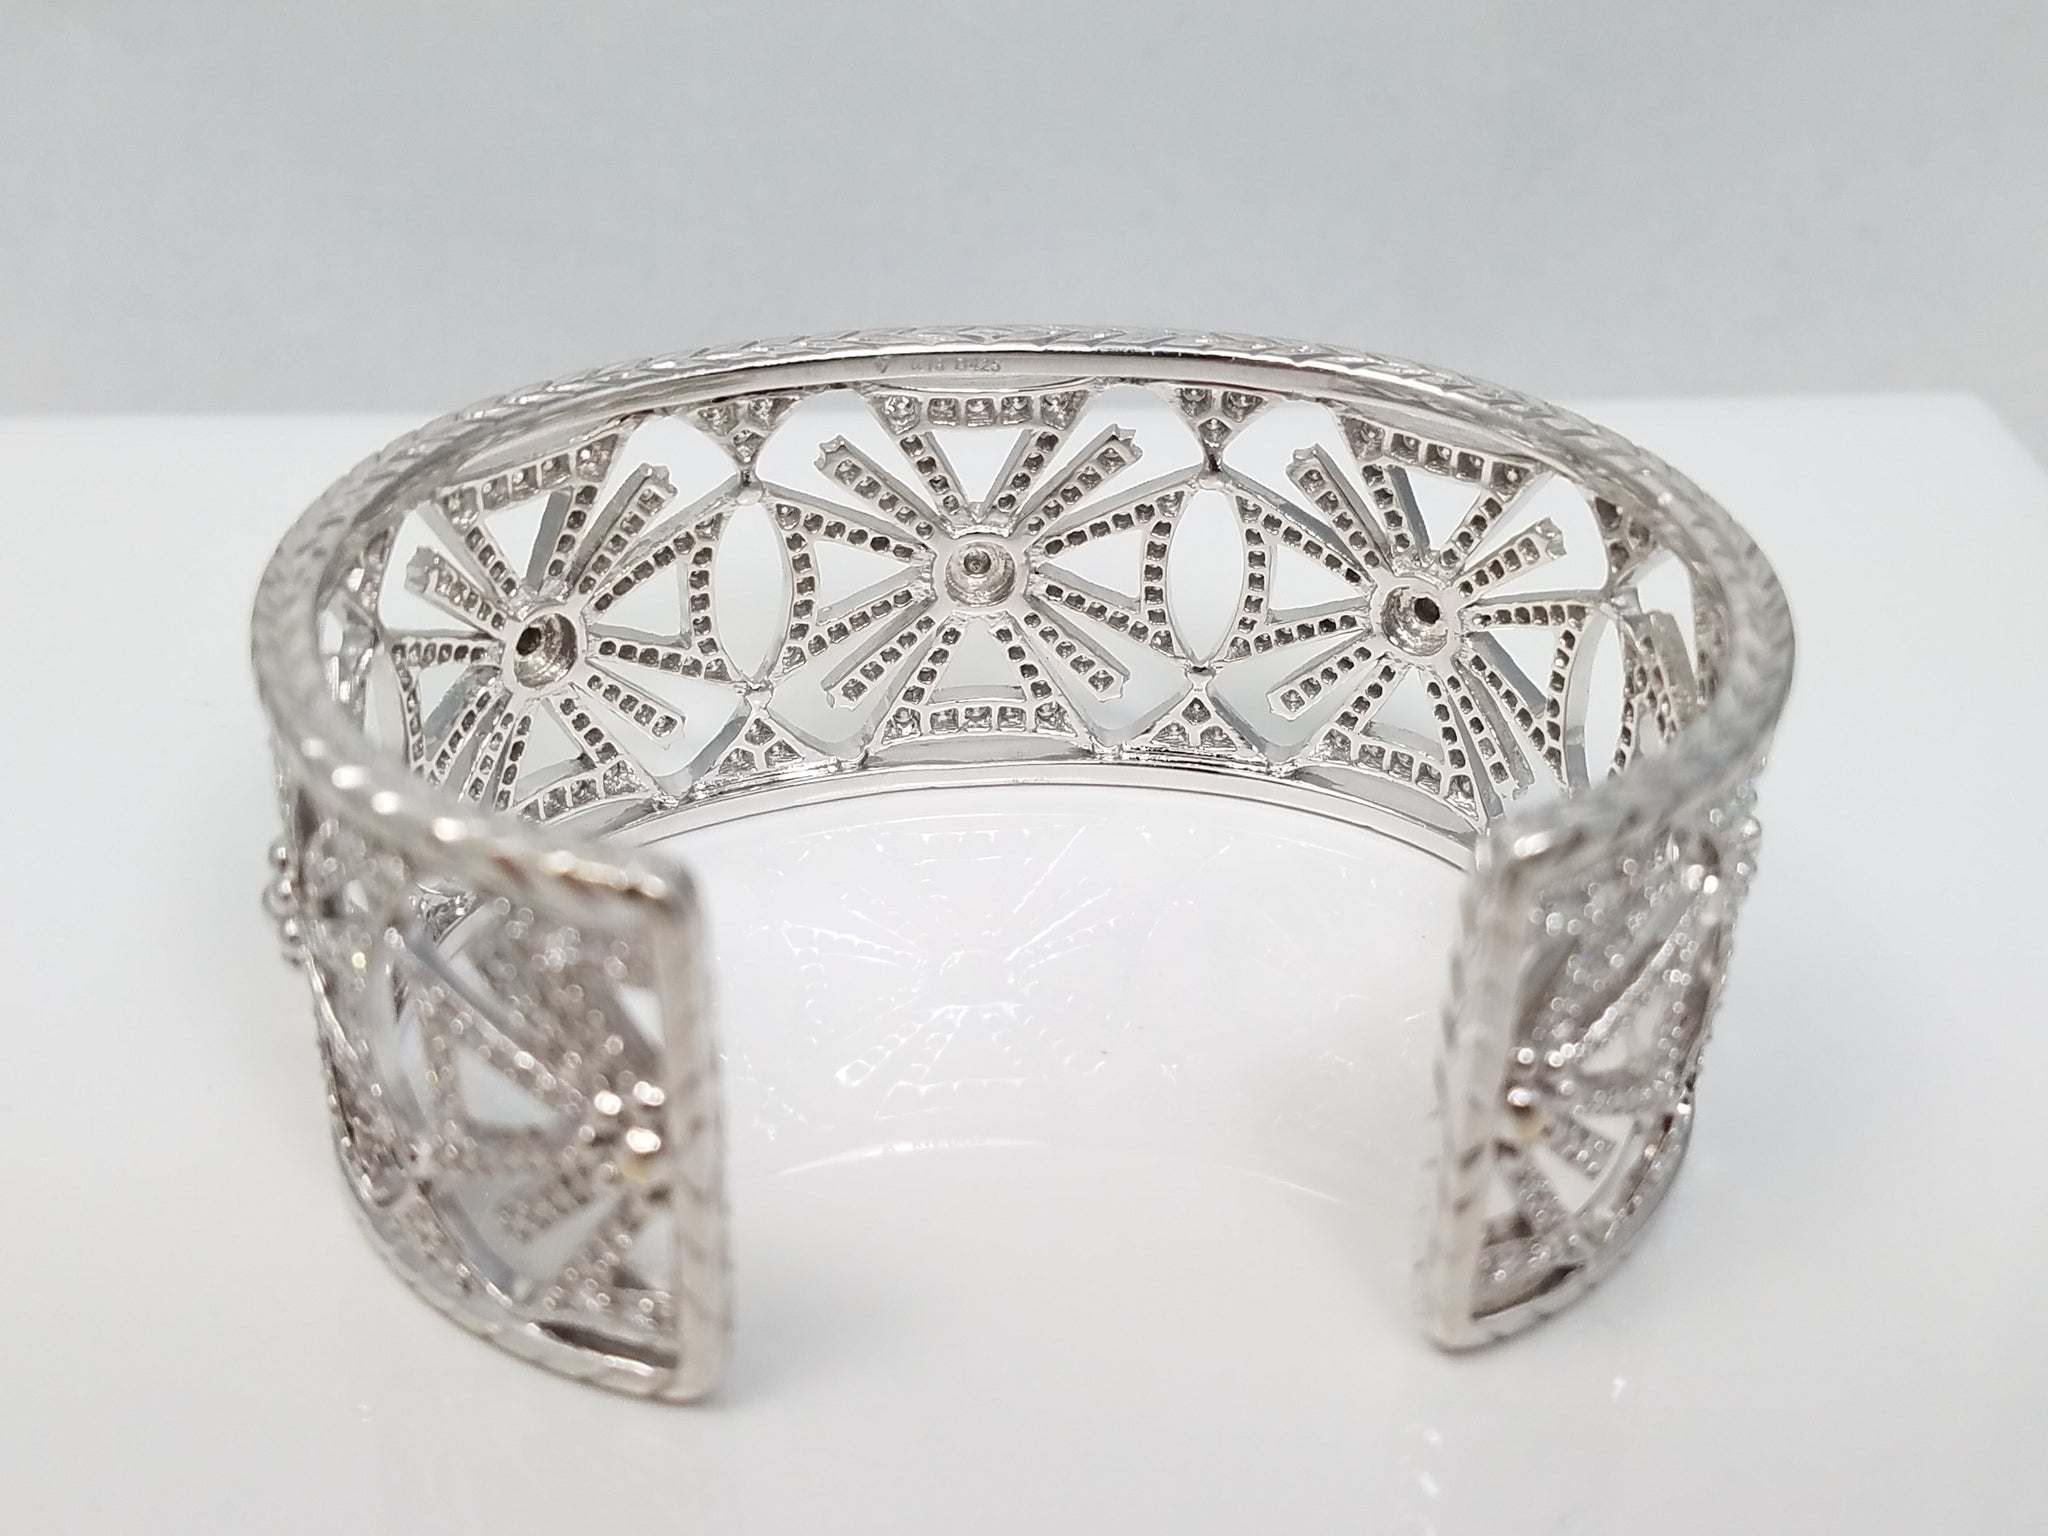 *$20,000 Retail! * Exquisite Designer 18k White Gold 4.25ctw Diamond Cuff Bangle Bracelet